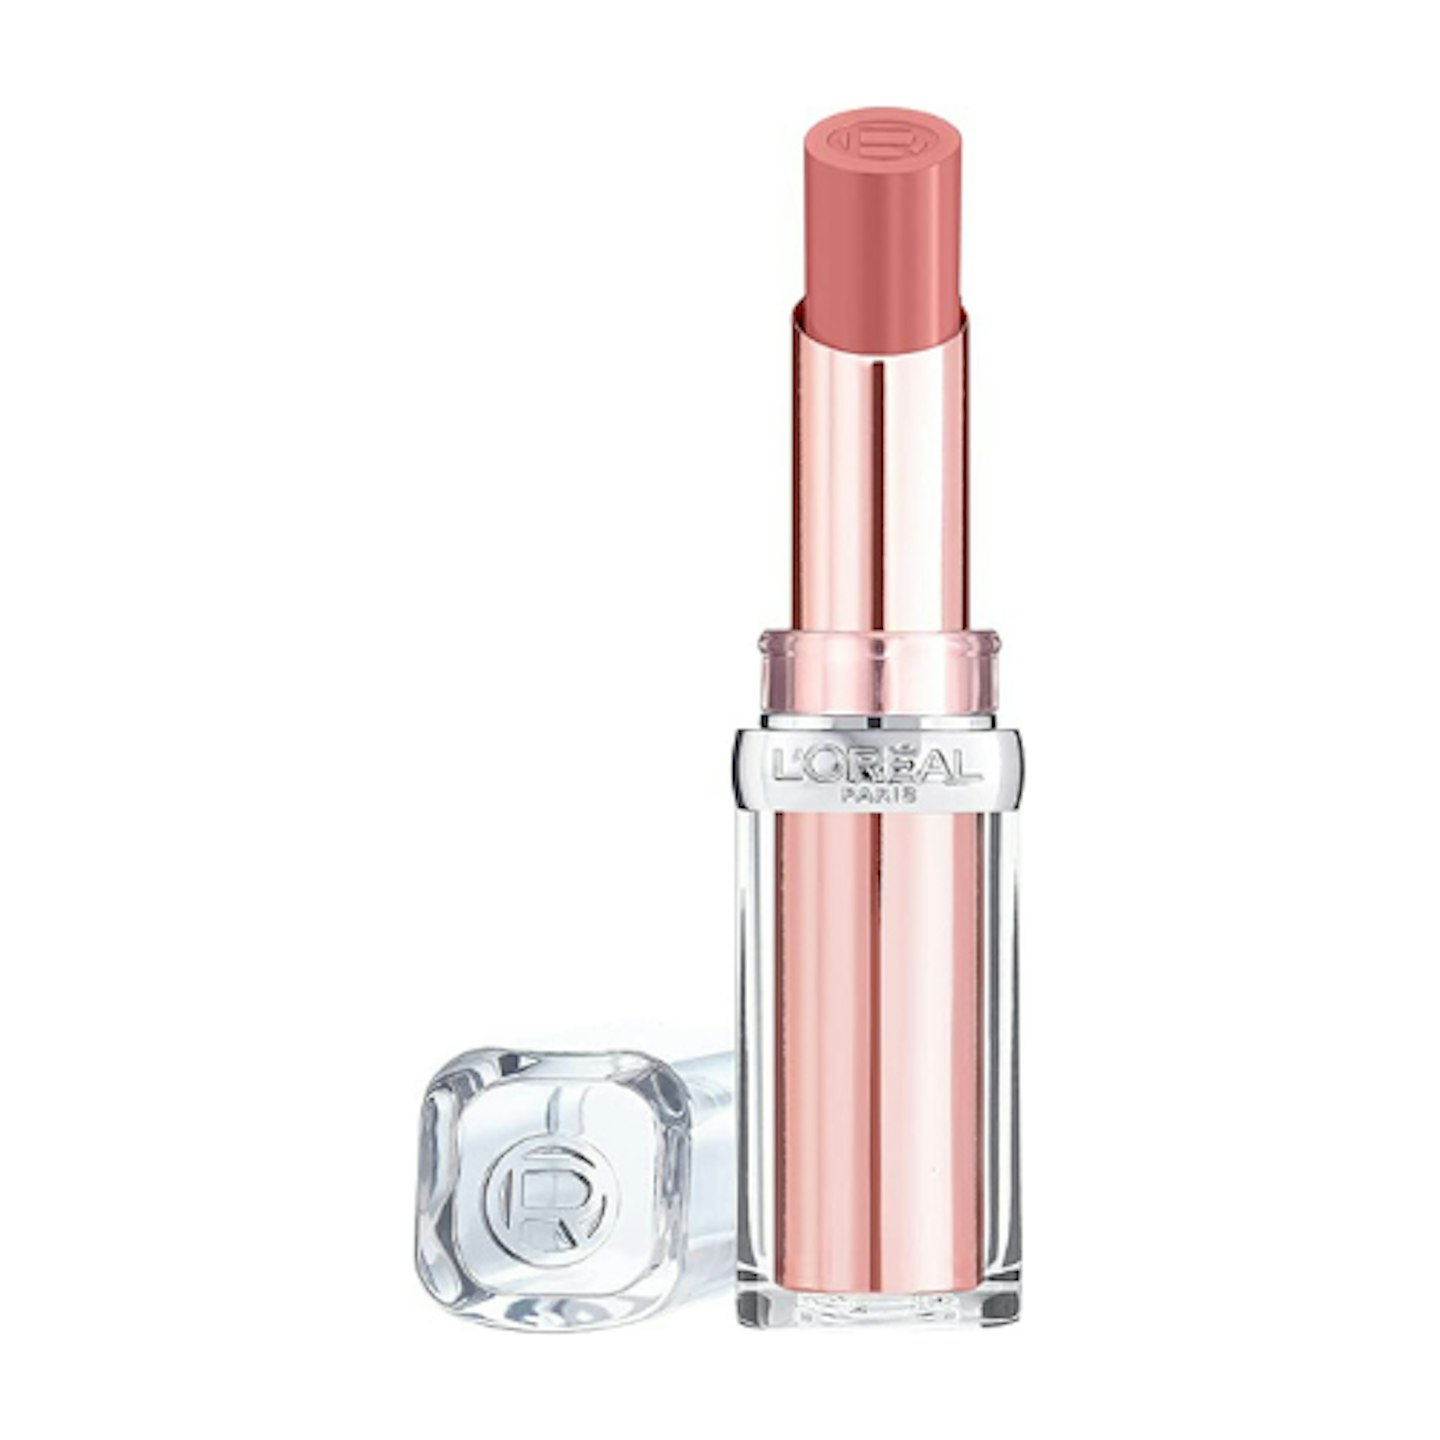 L'Oreal Paris Glow Paradise Balm-In-Lipstick